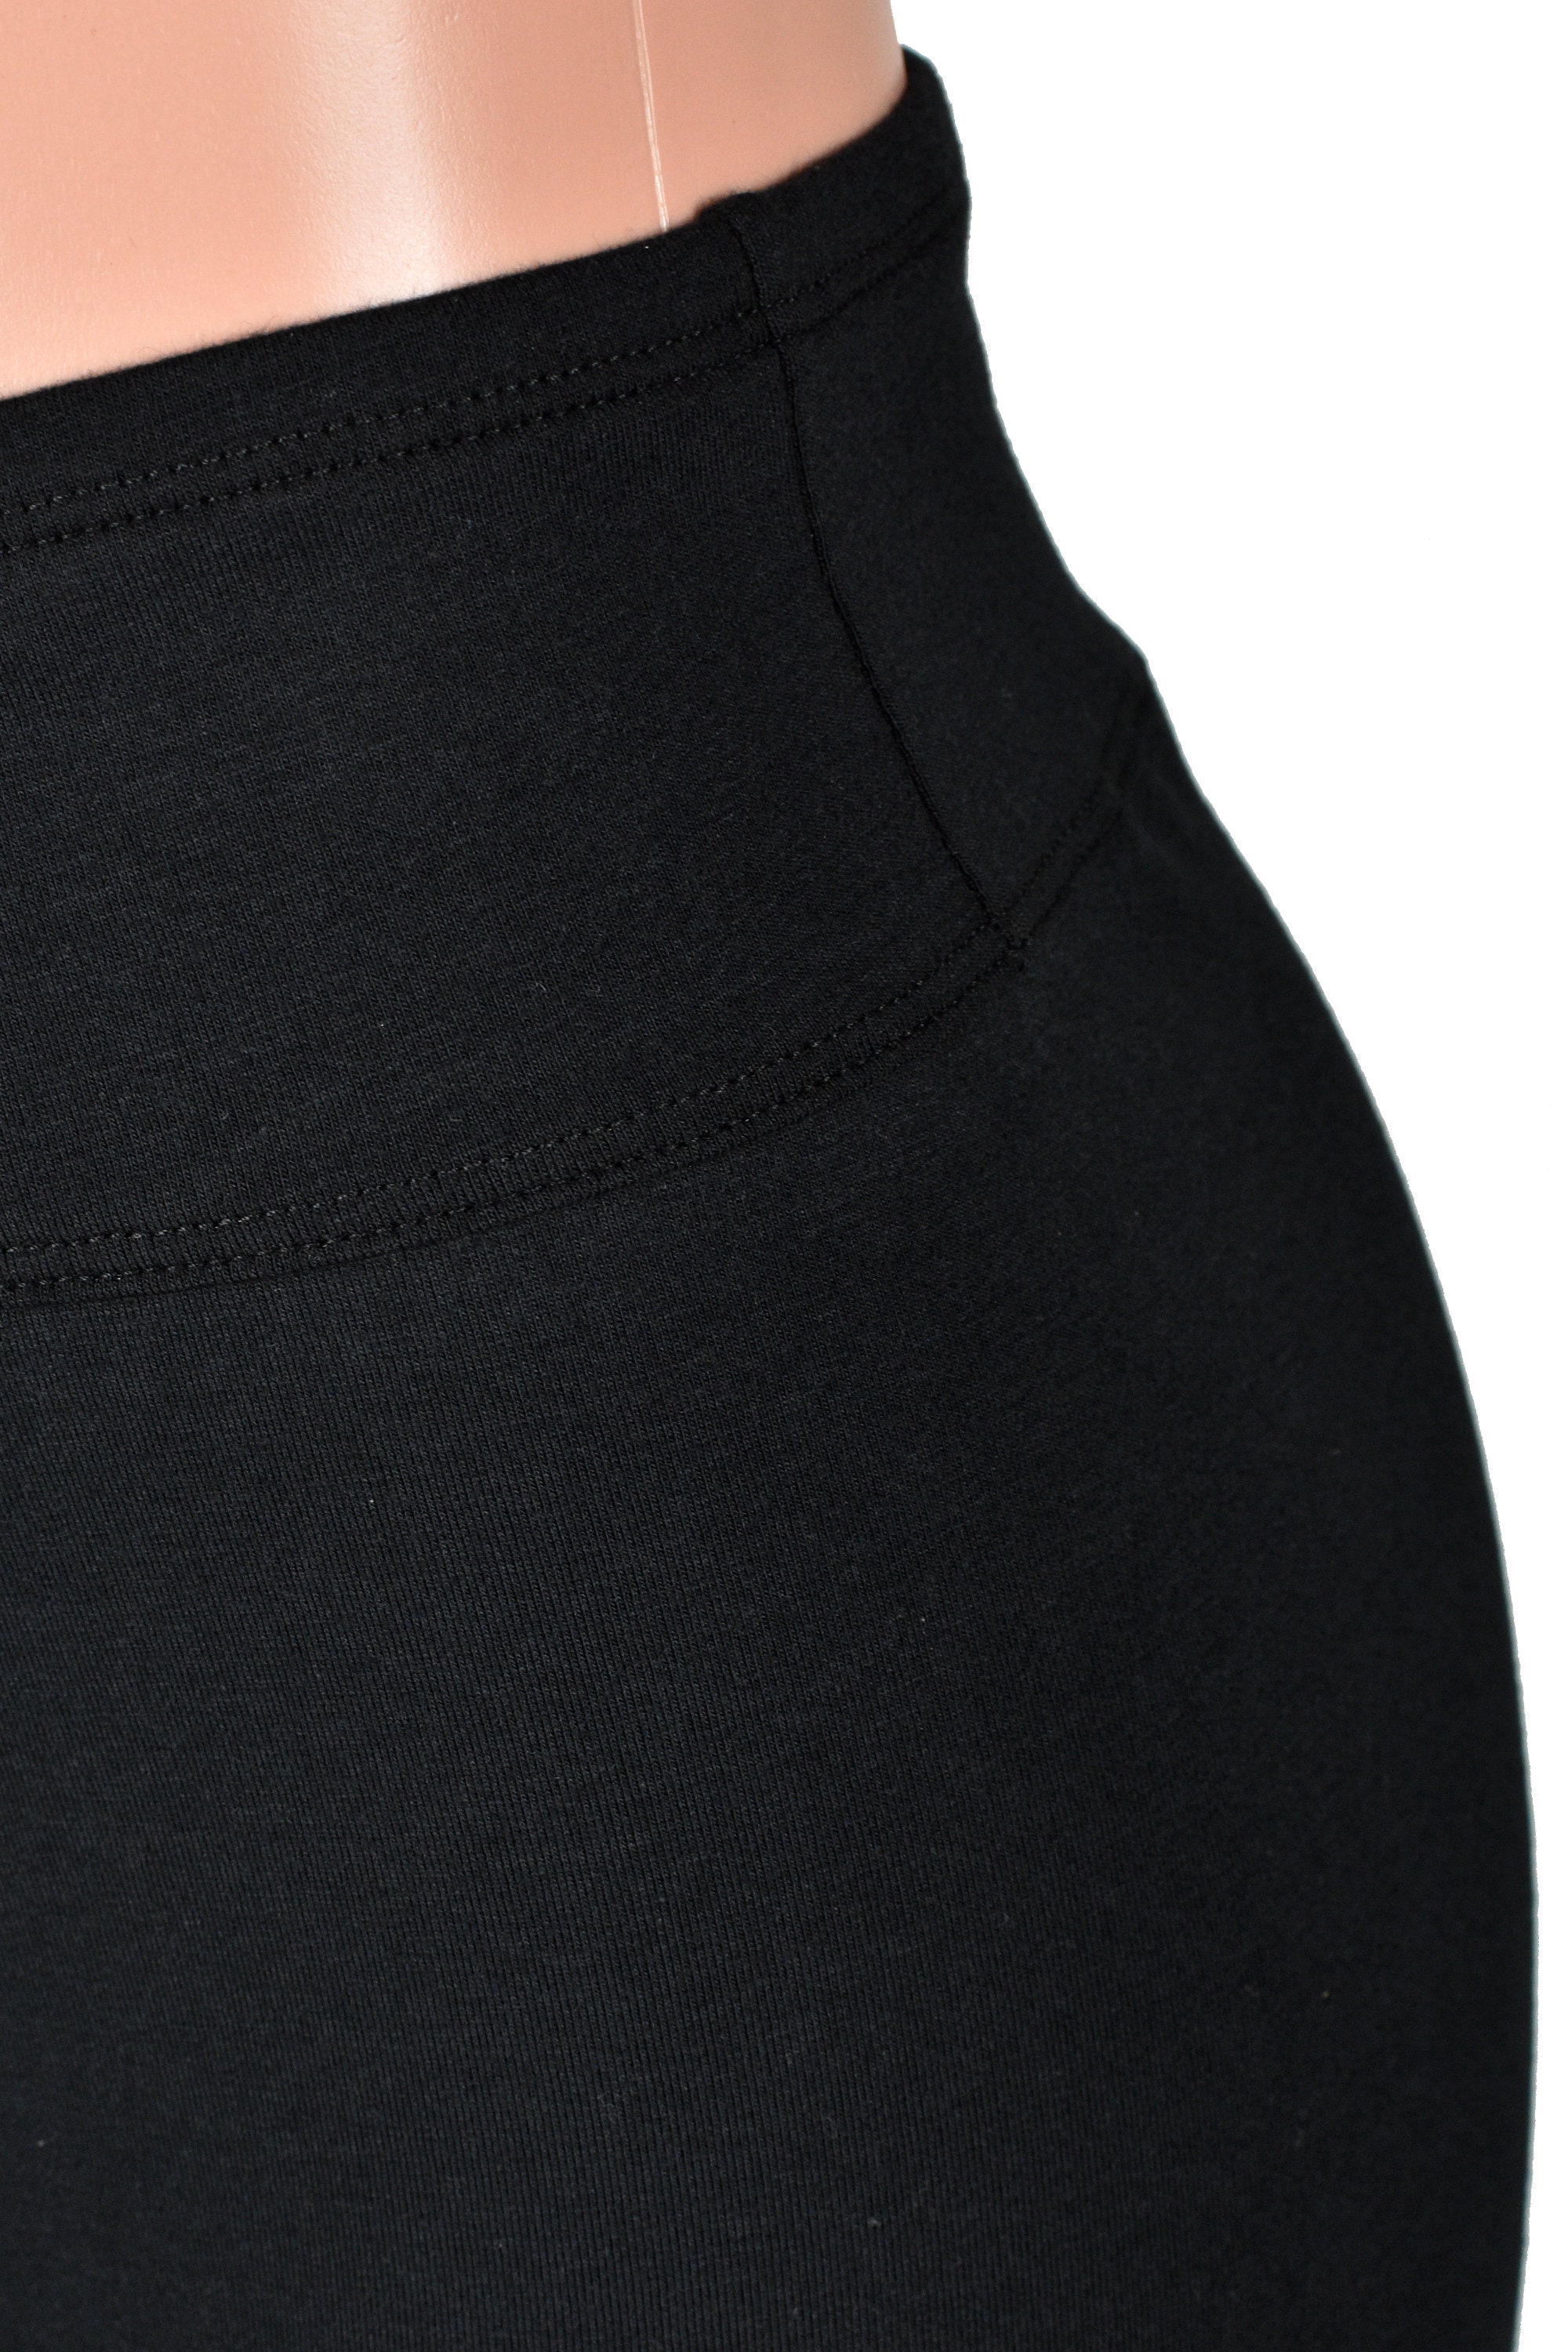 Black Cotton Spandex Leggings XS S M L XL 2xl 3xl Plus Size Stretch High-waist  Soft Matte Pants 90% Cotton, 10 Spandex 4 Inseam Lengths 